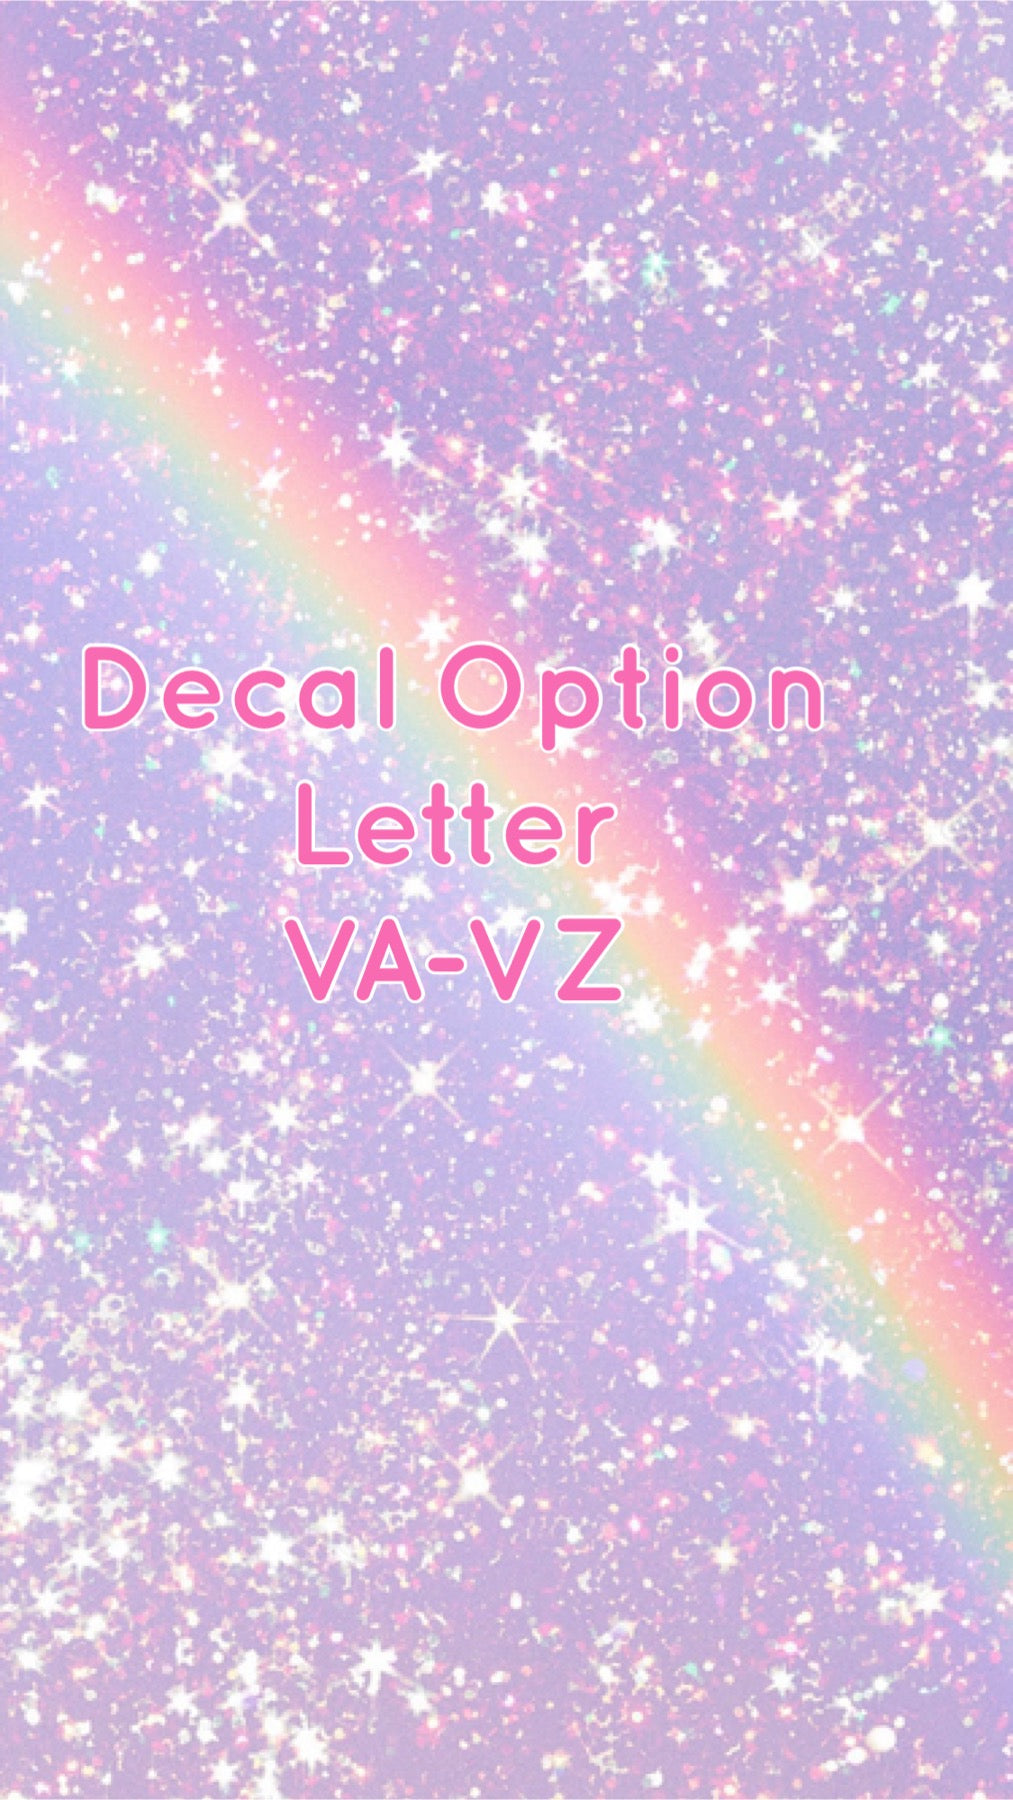 Decals for Cups-Letter VA-VZ